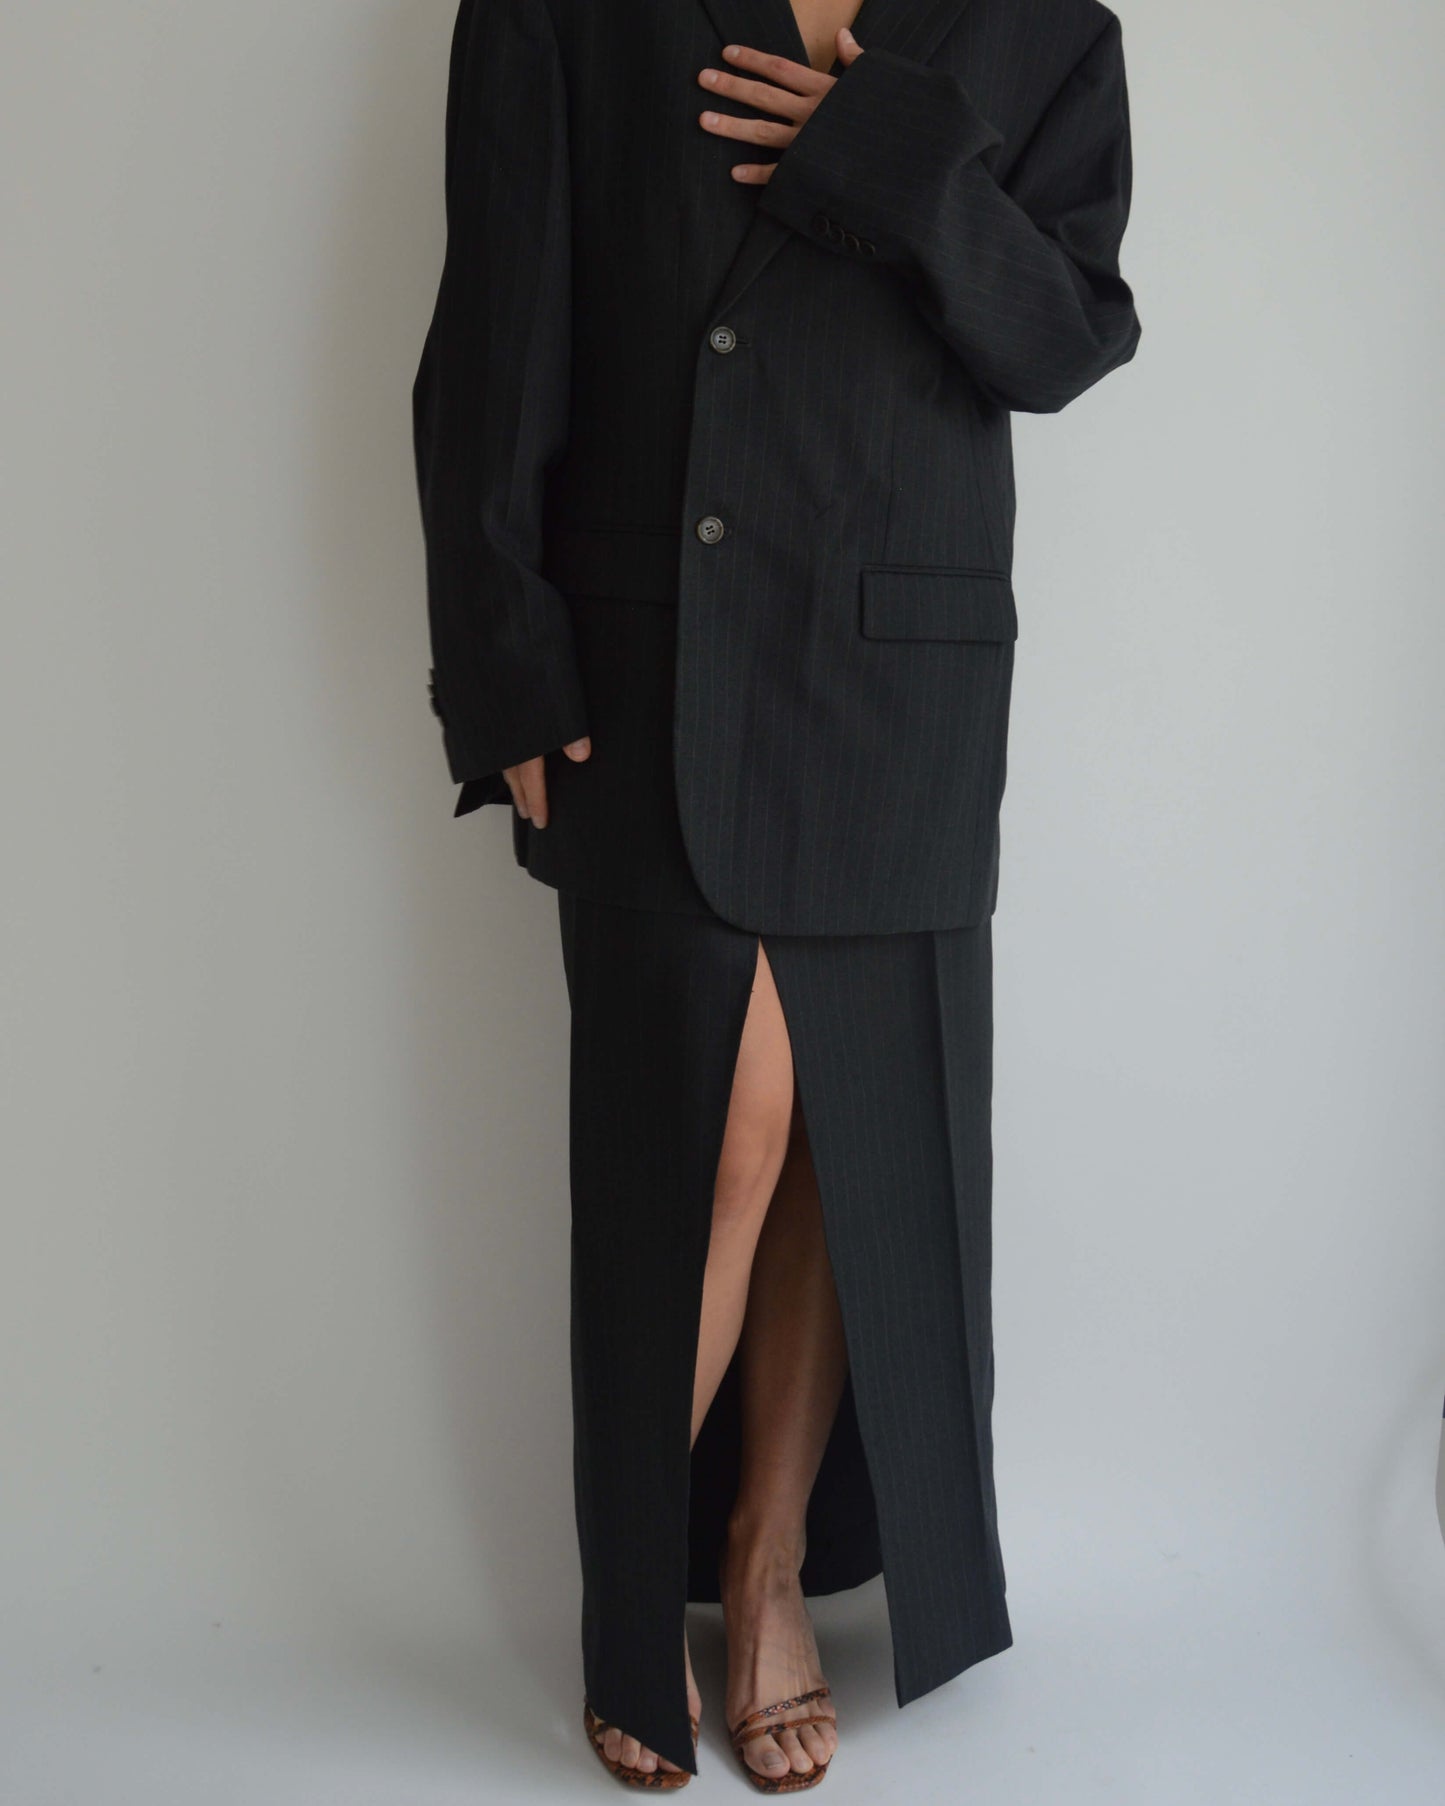 Skirt Suit - Black White Lines (S/M)